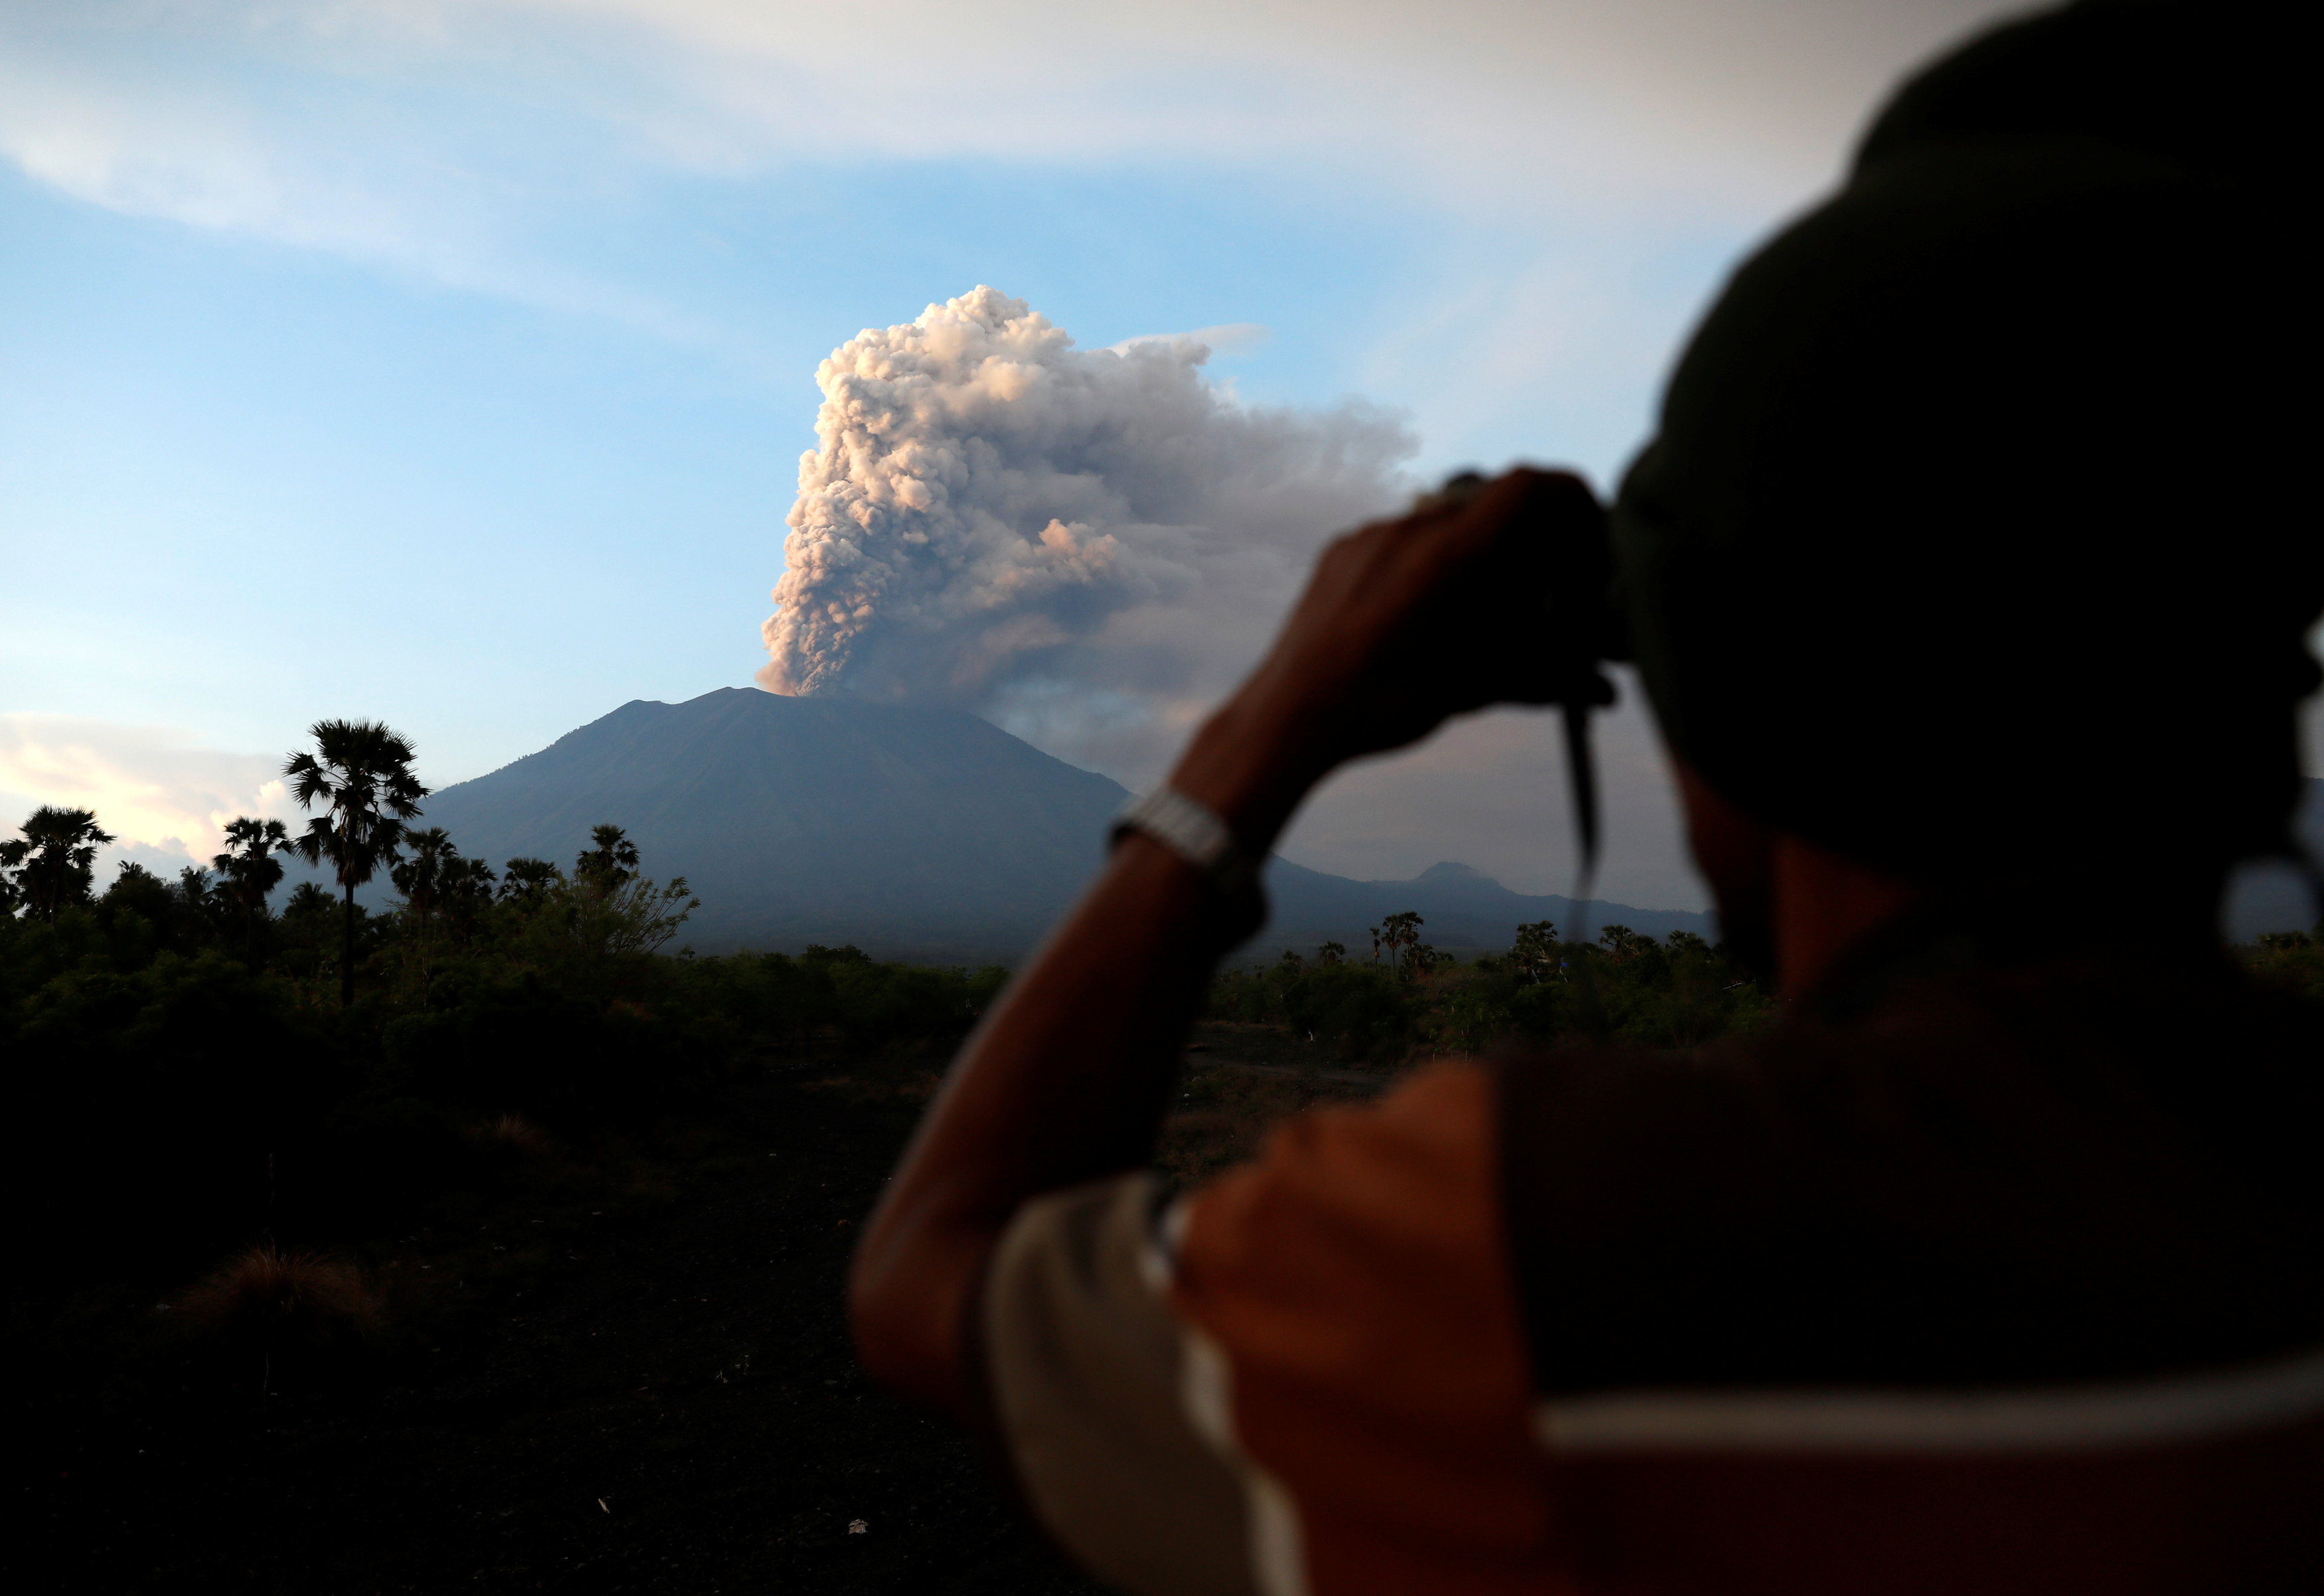 In pictures: Bali volcano threatens eruption